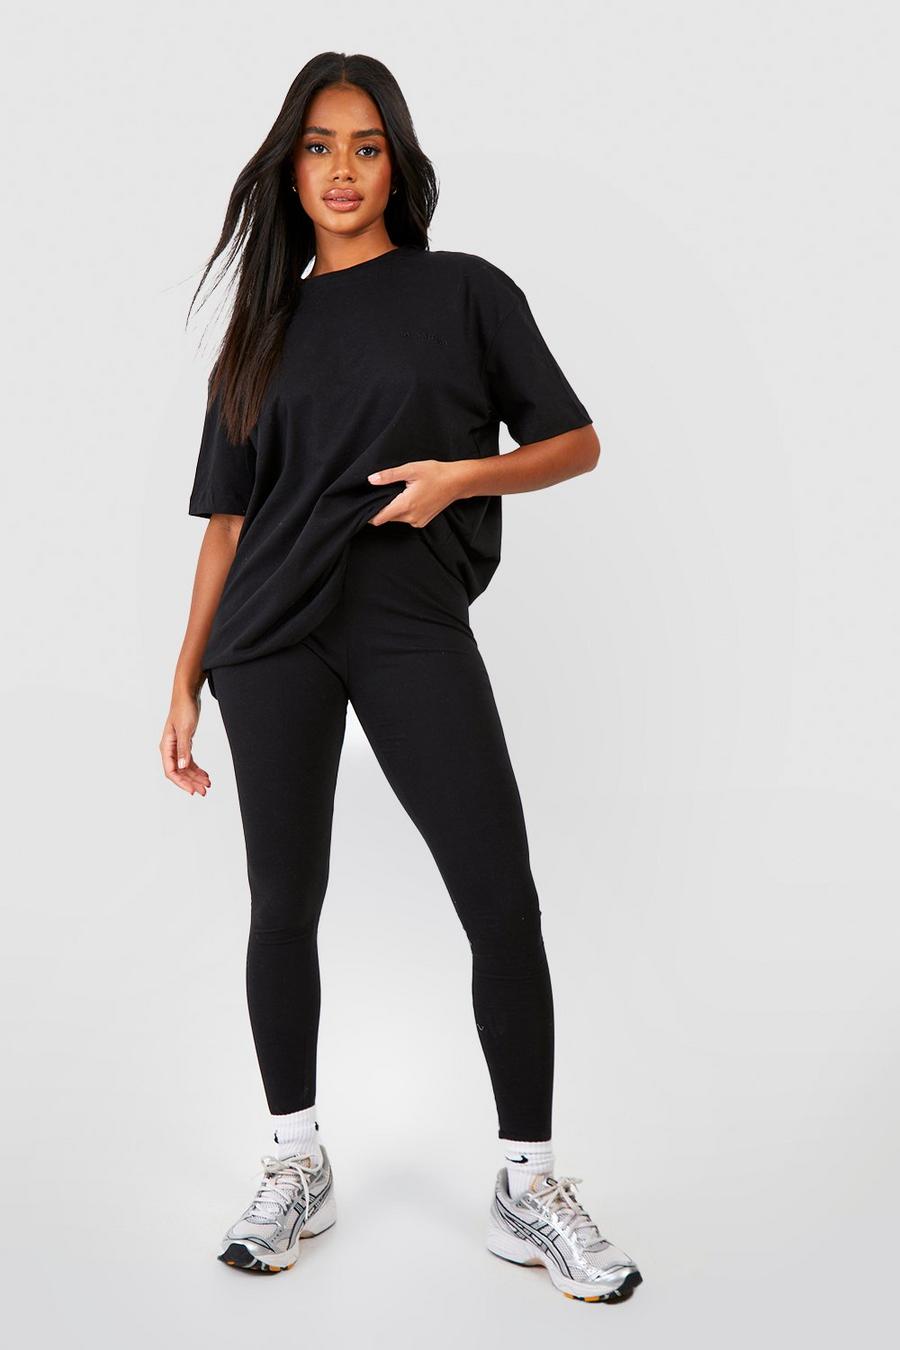 black oversized shirt outfit leggings｜TikTok Search